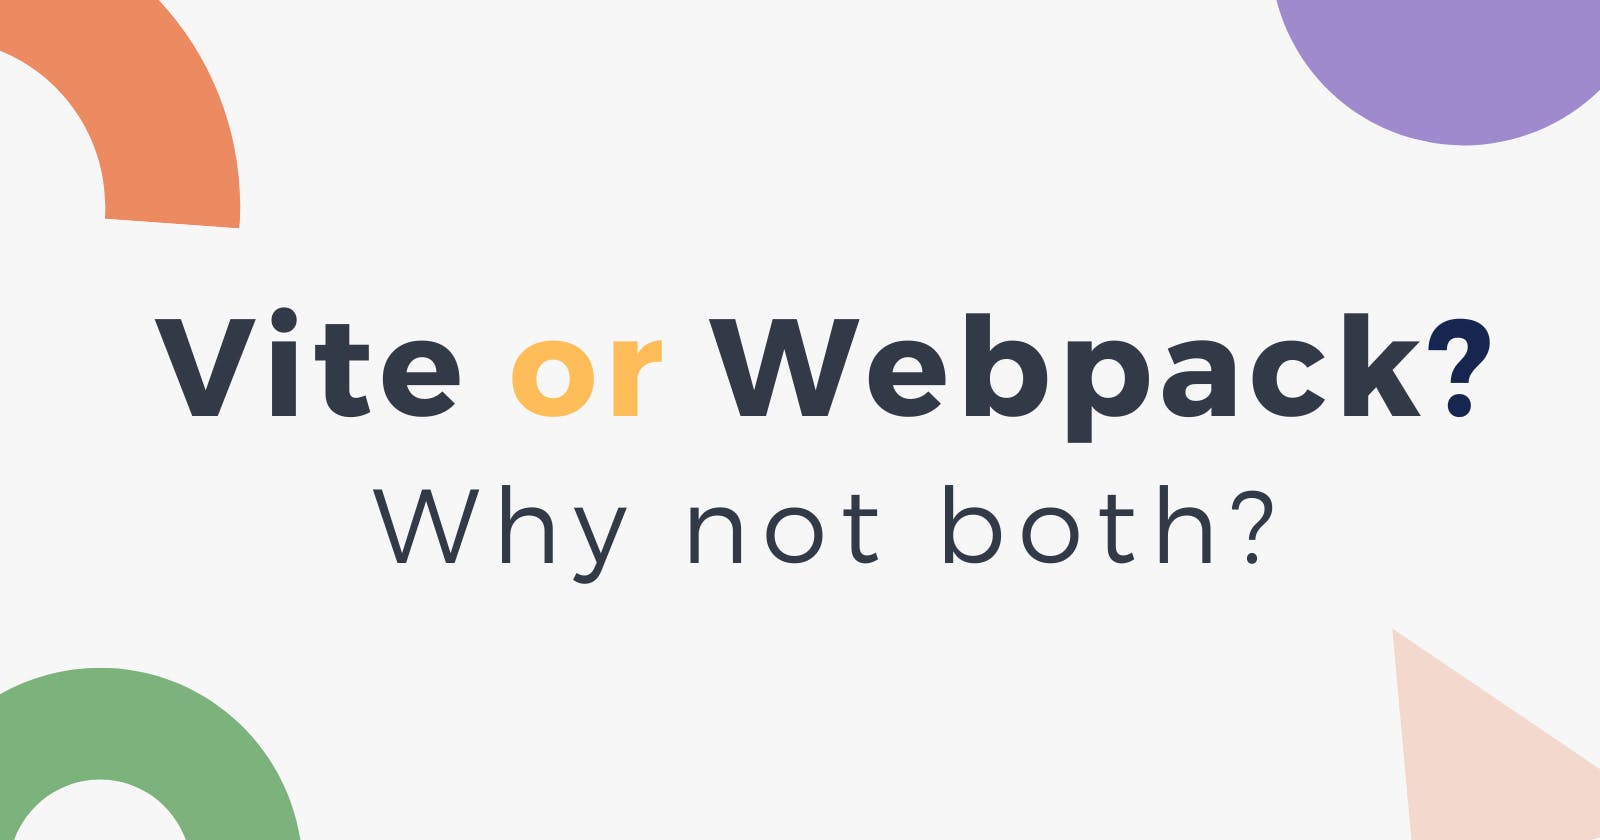 Vite or Webpack? Why not both?